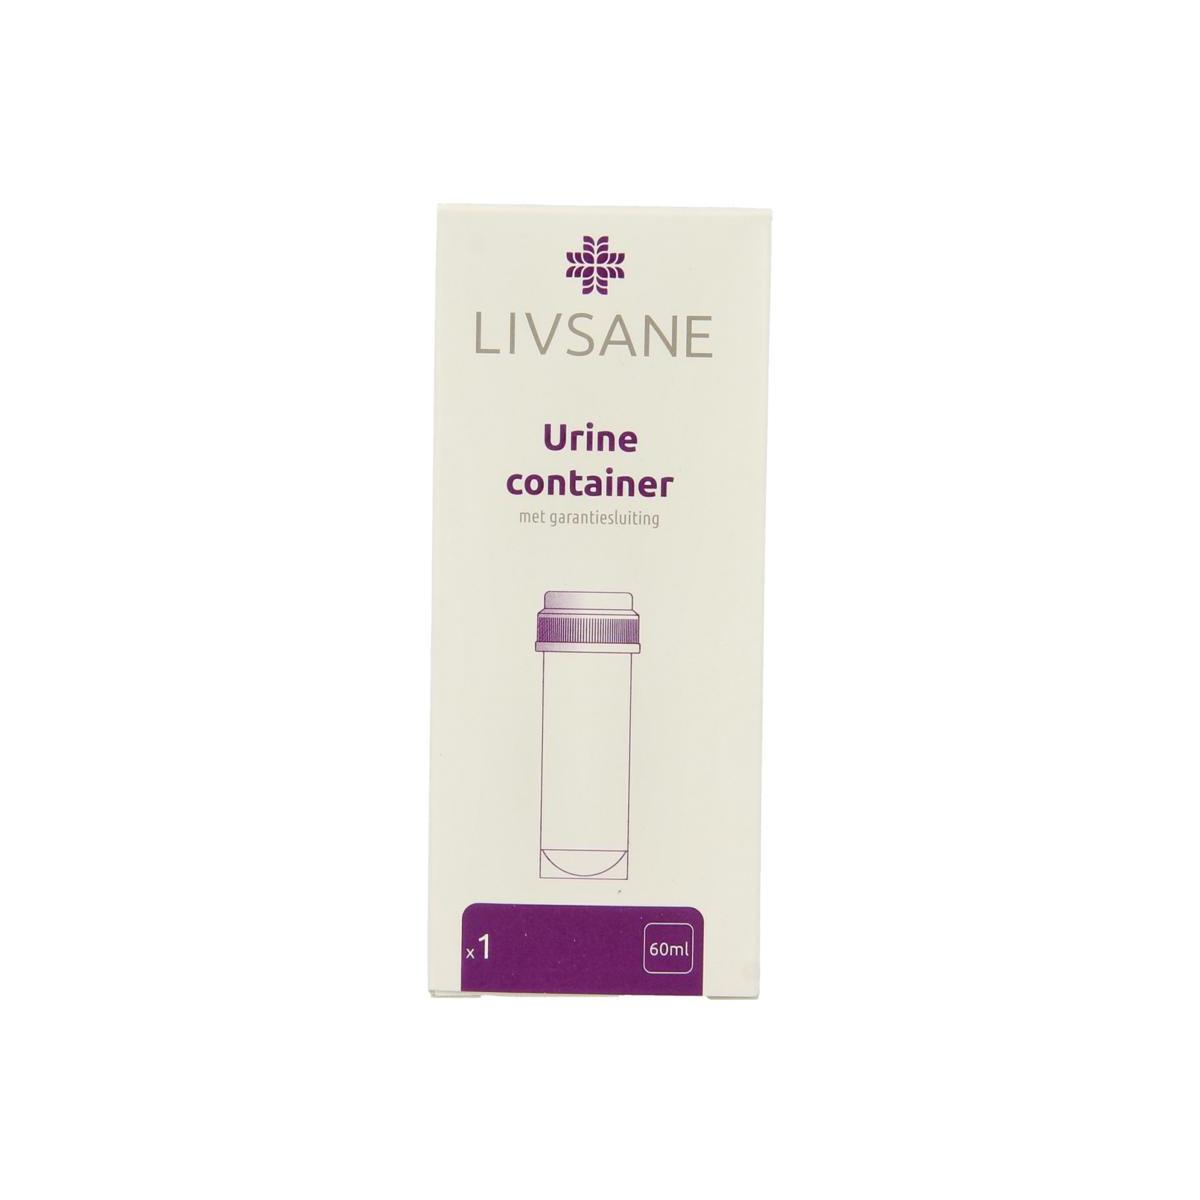 Livsane Urinecontainer 60ml